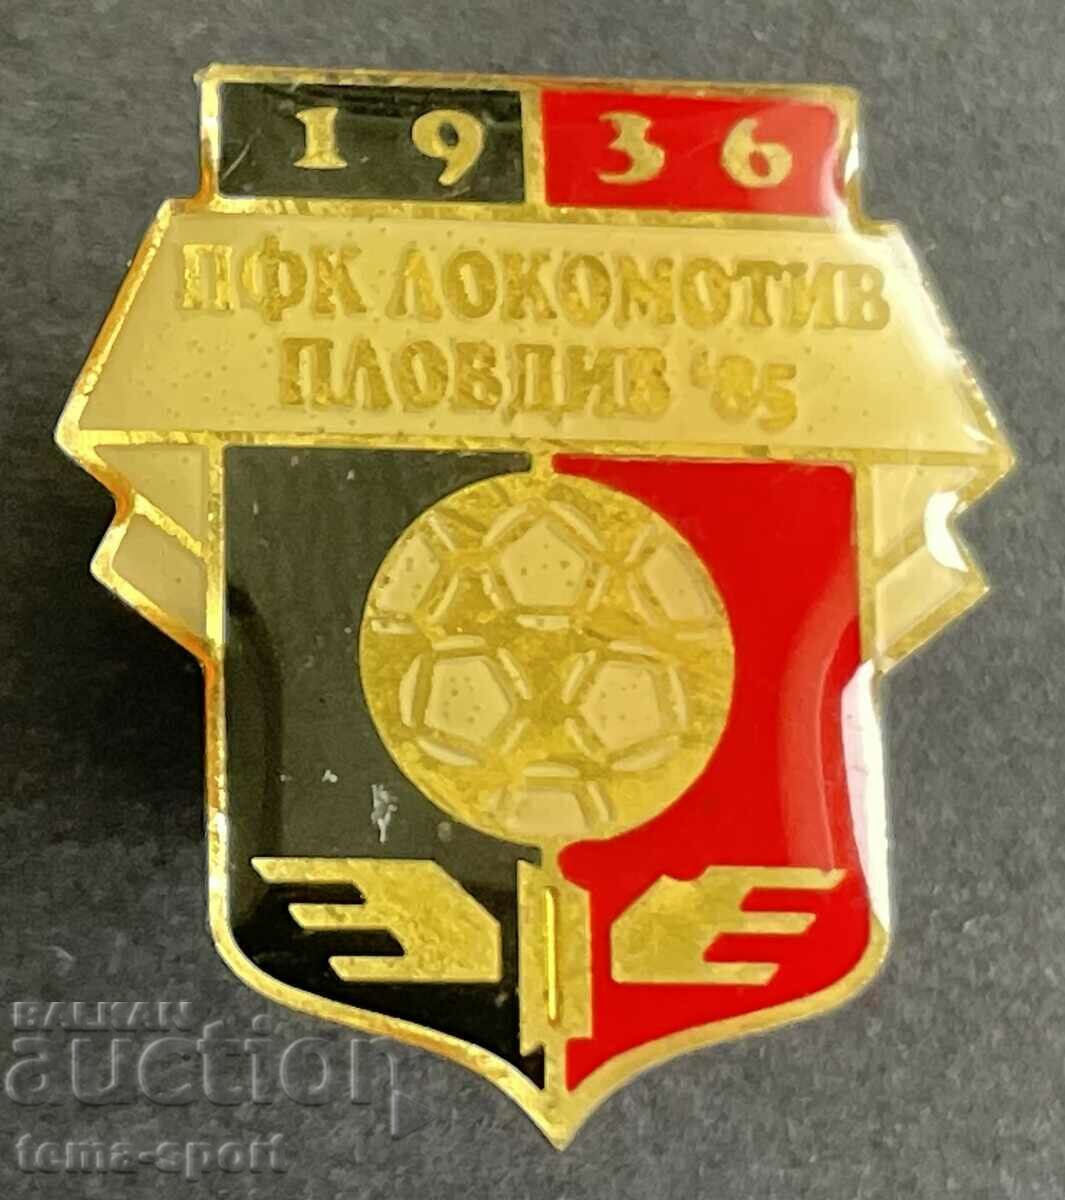 153 Bulgaria semnează clubul de fotbal Lokomotiv Plovdiv 1936.